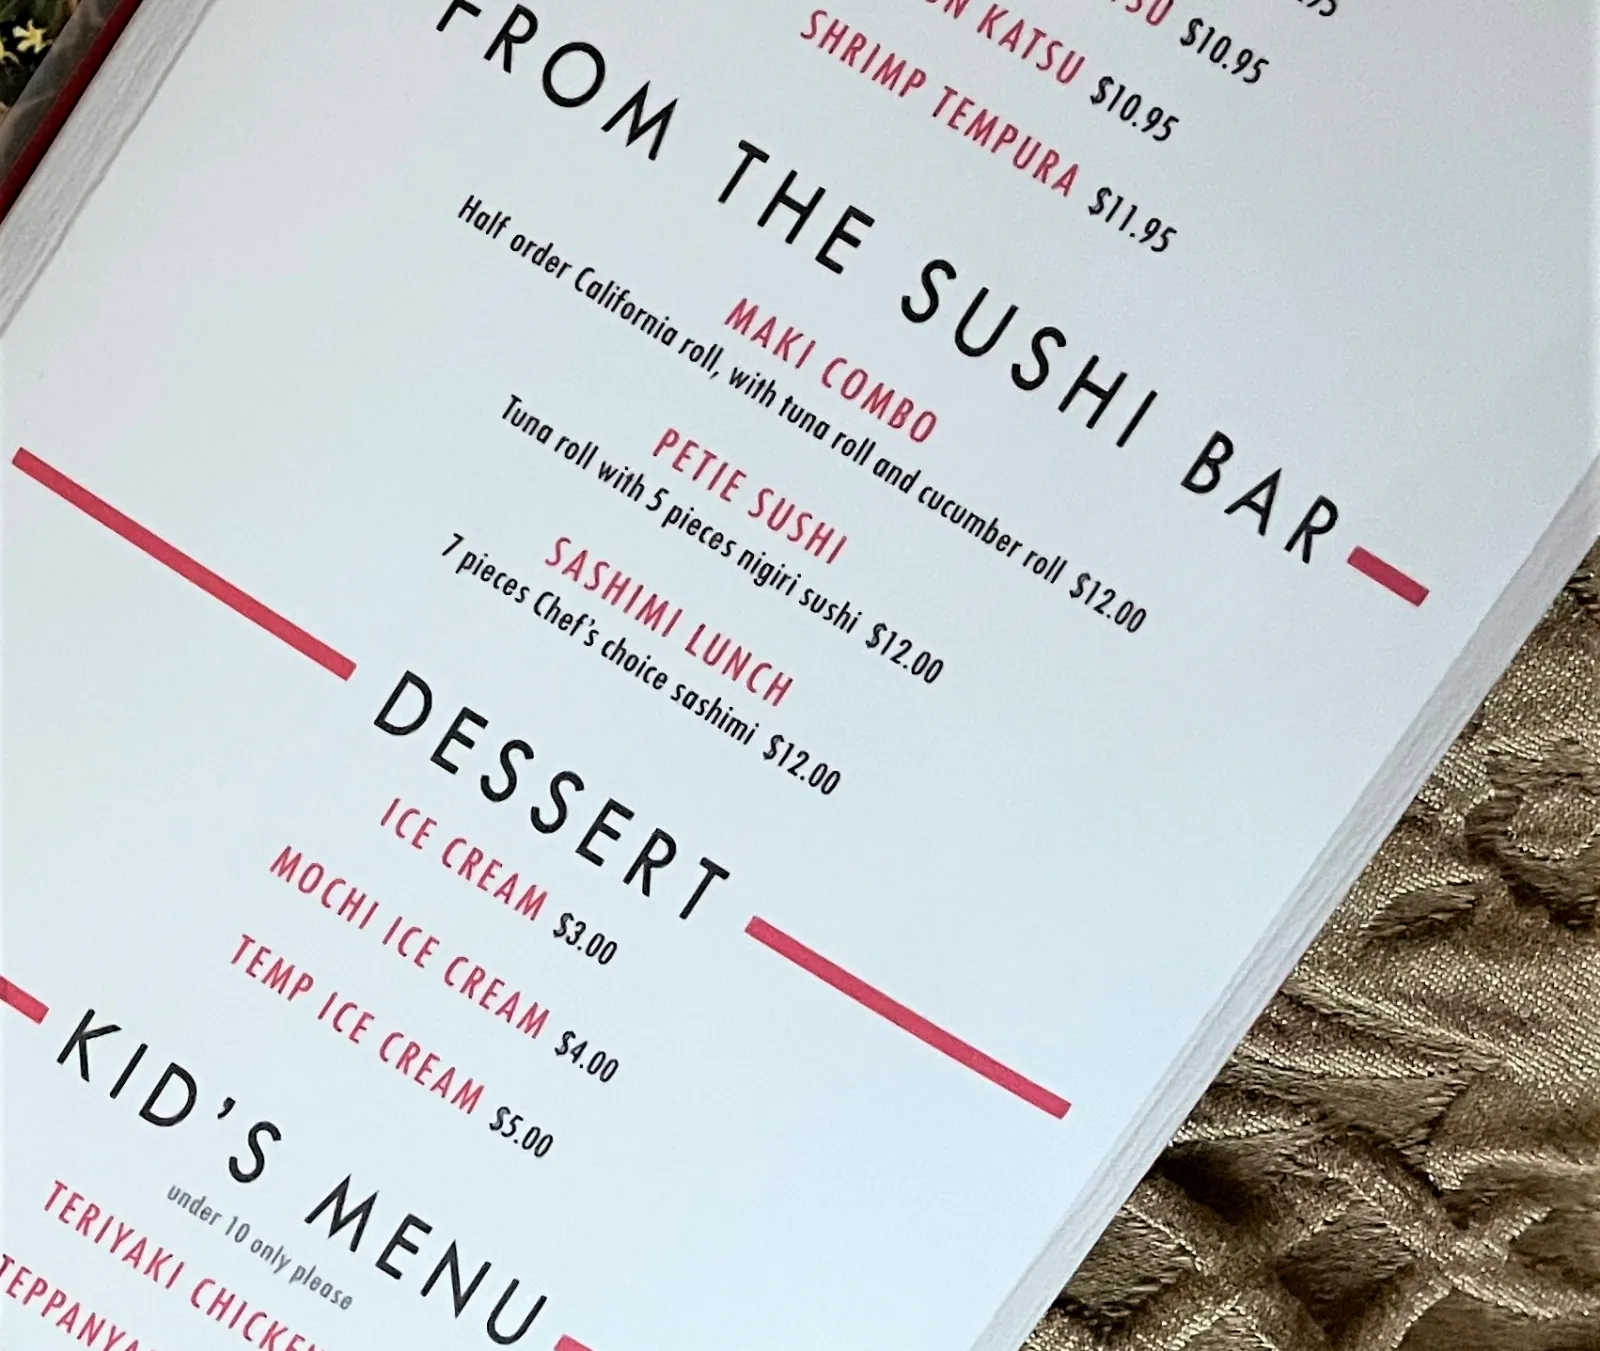 A laminate restaurant menu lying on a table